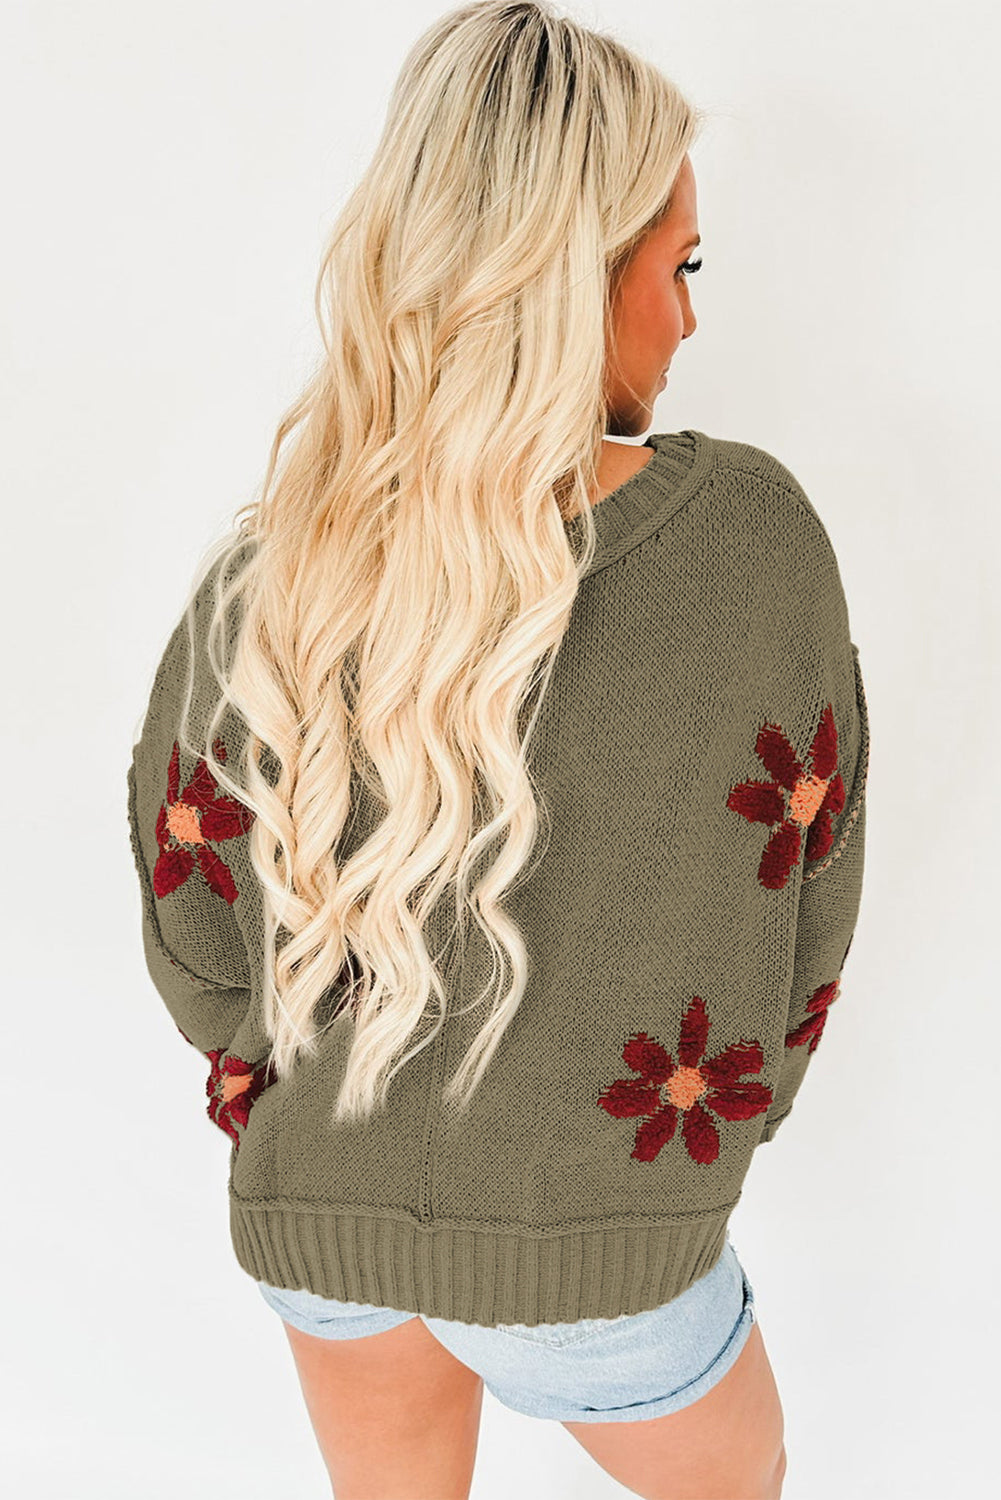 sage green big flower knit sweater